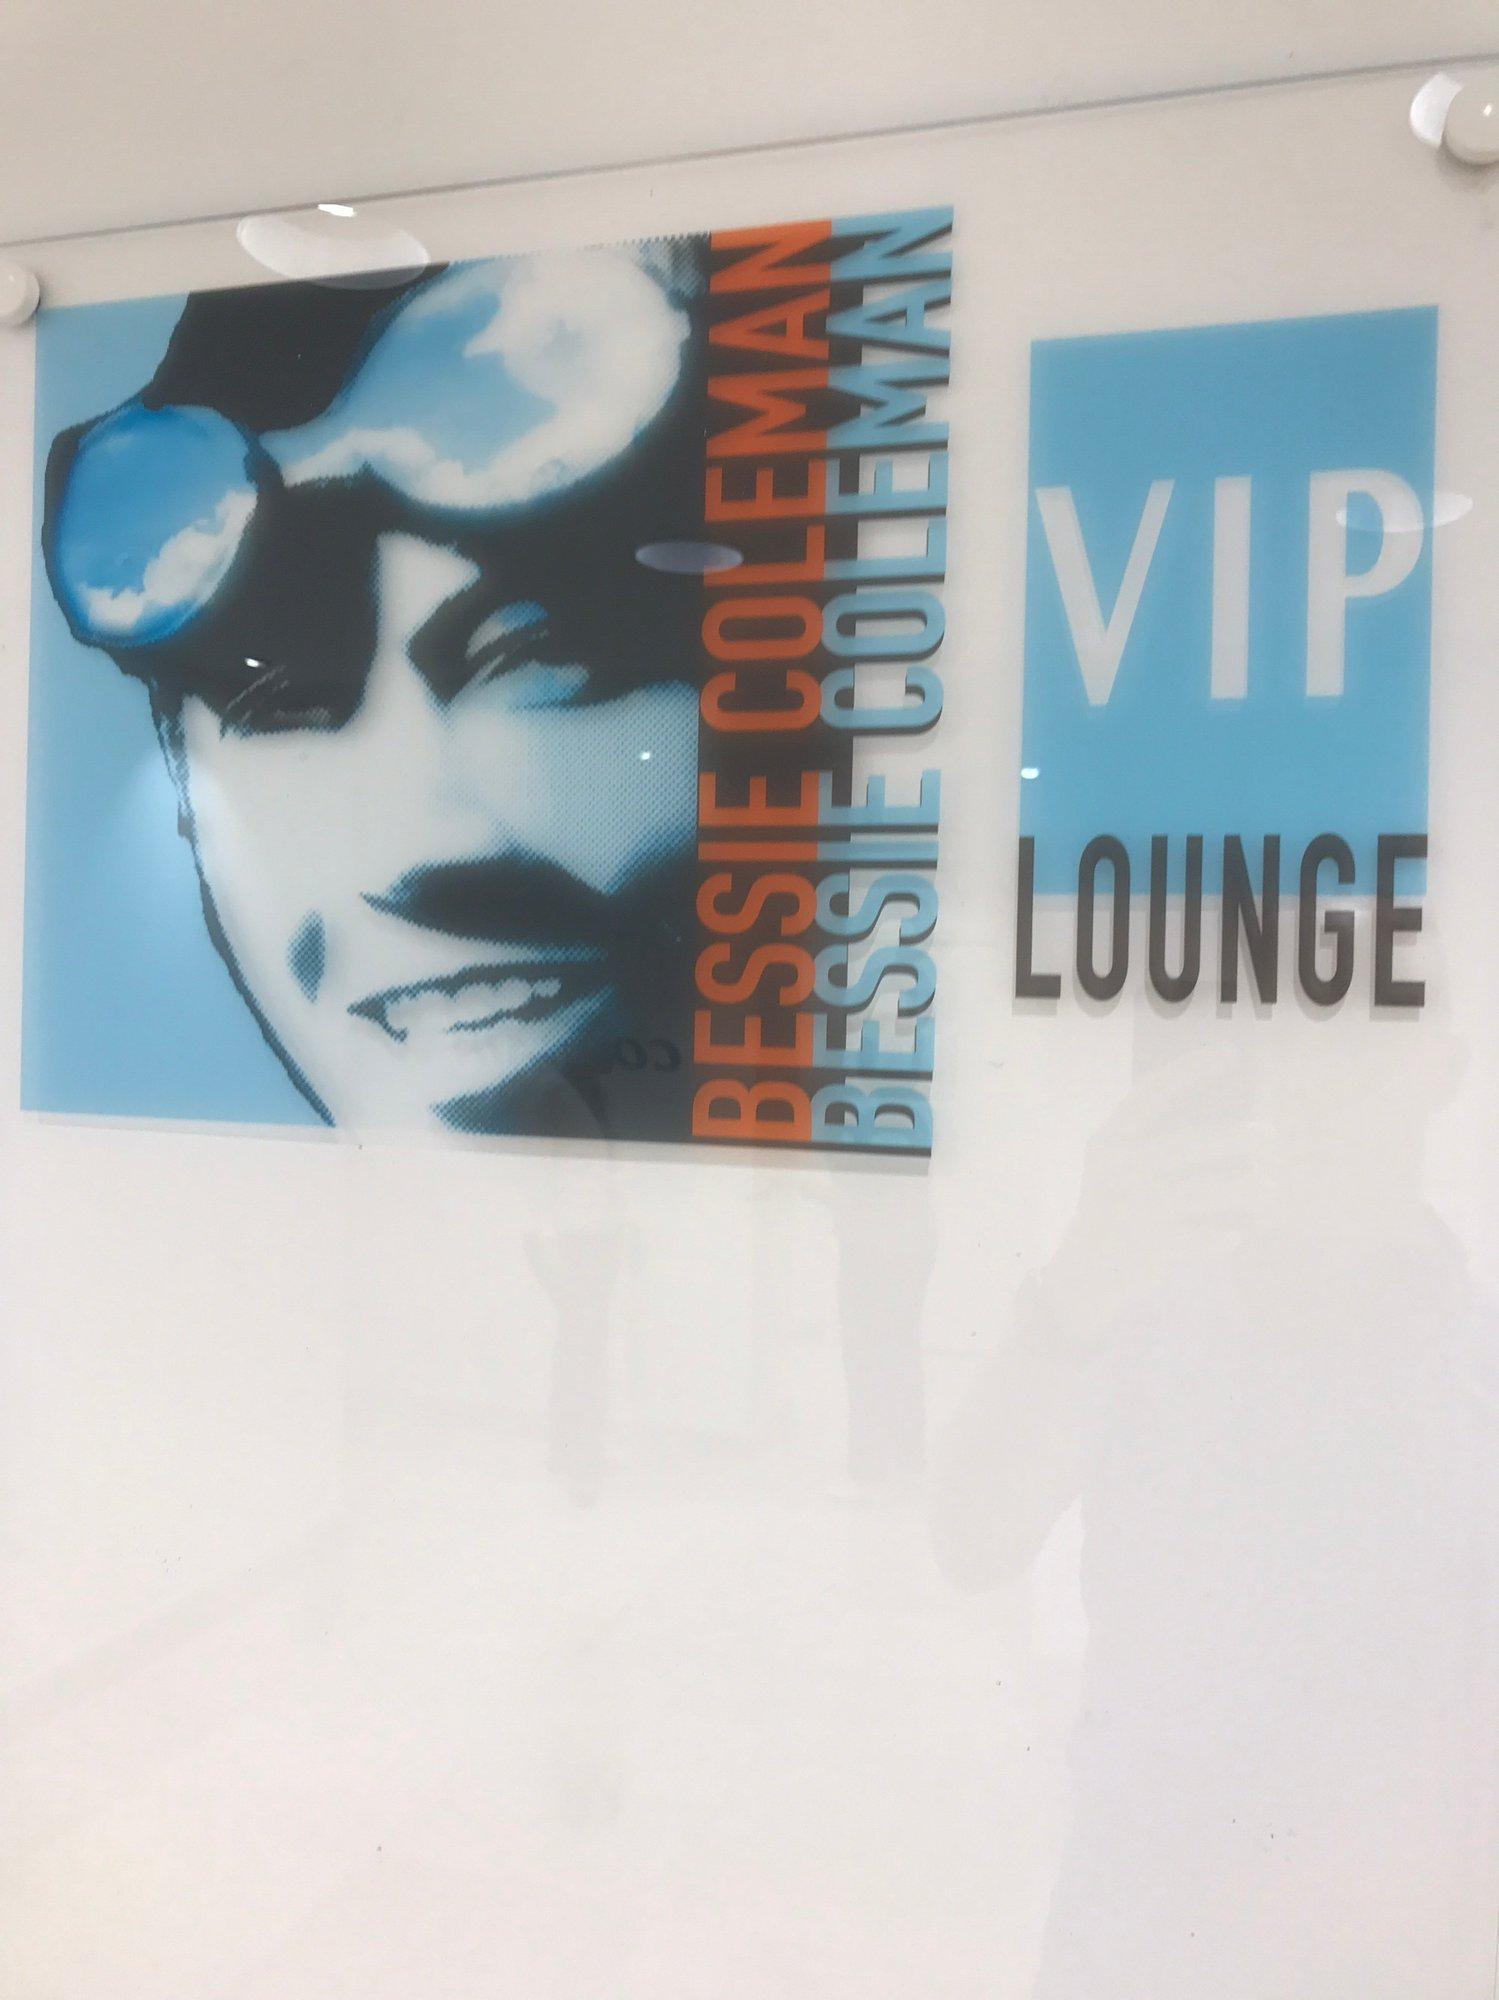 Bessie Coleman VIP Lounge image 3 of 7